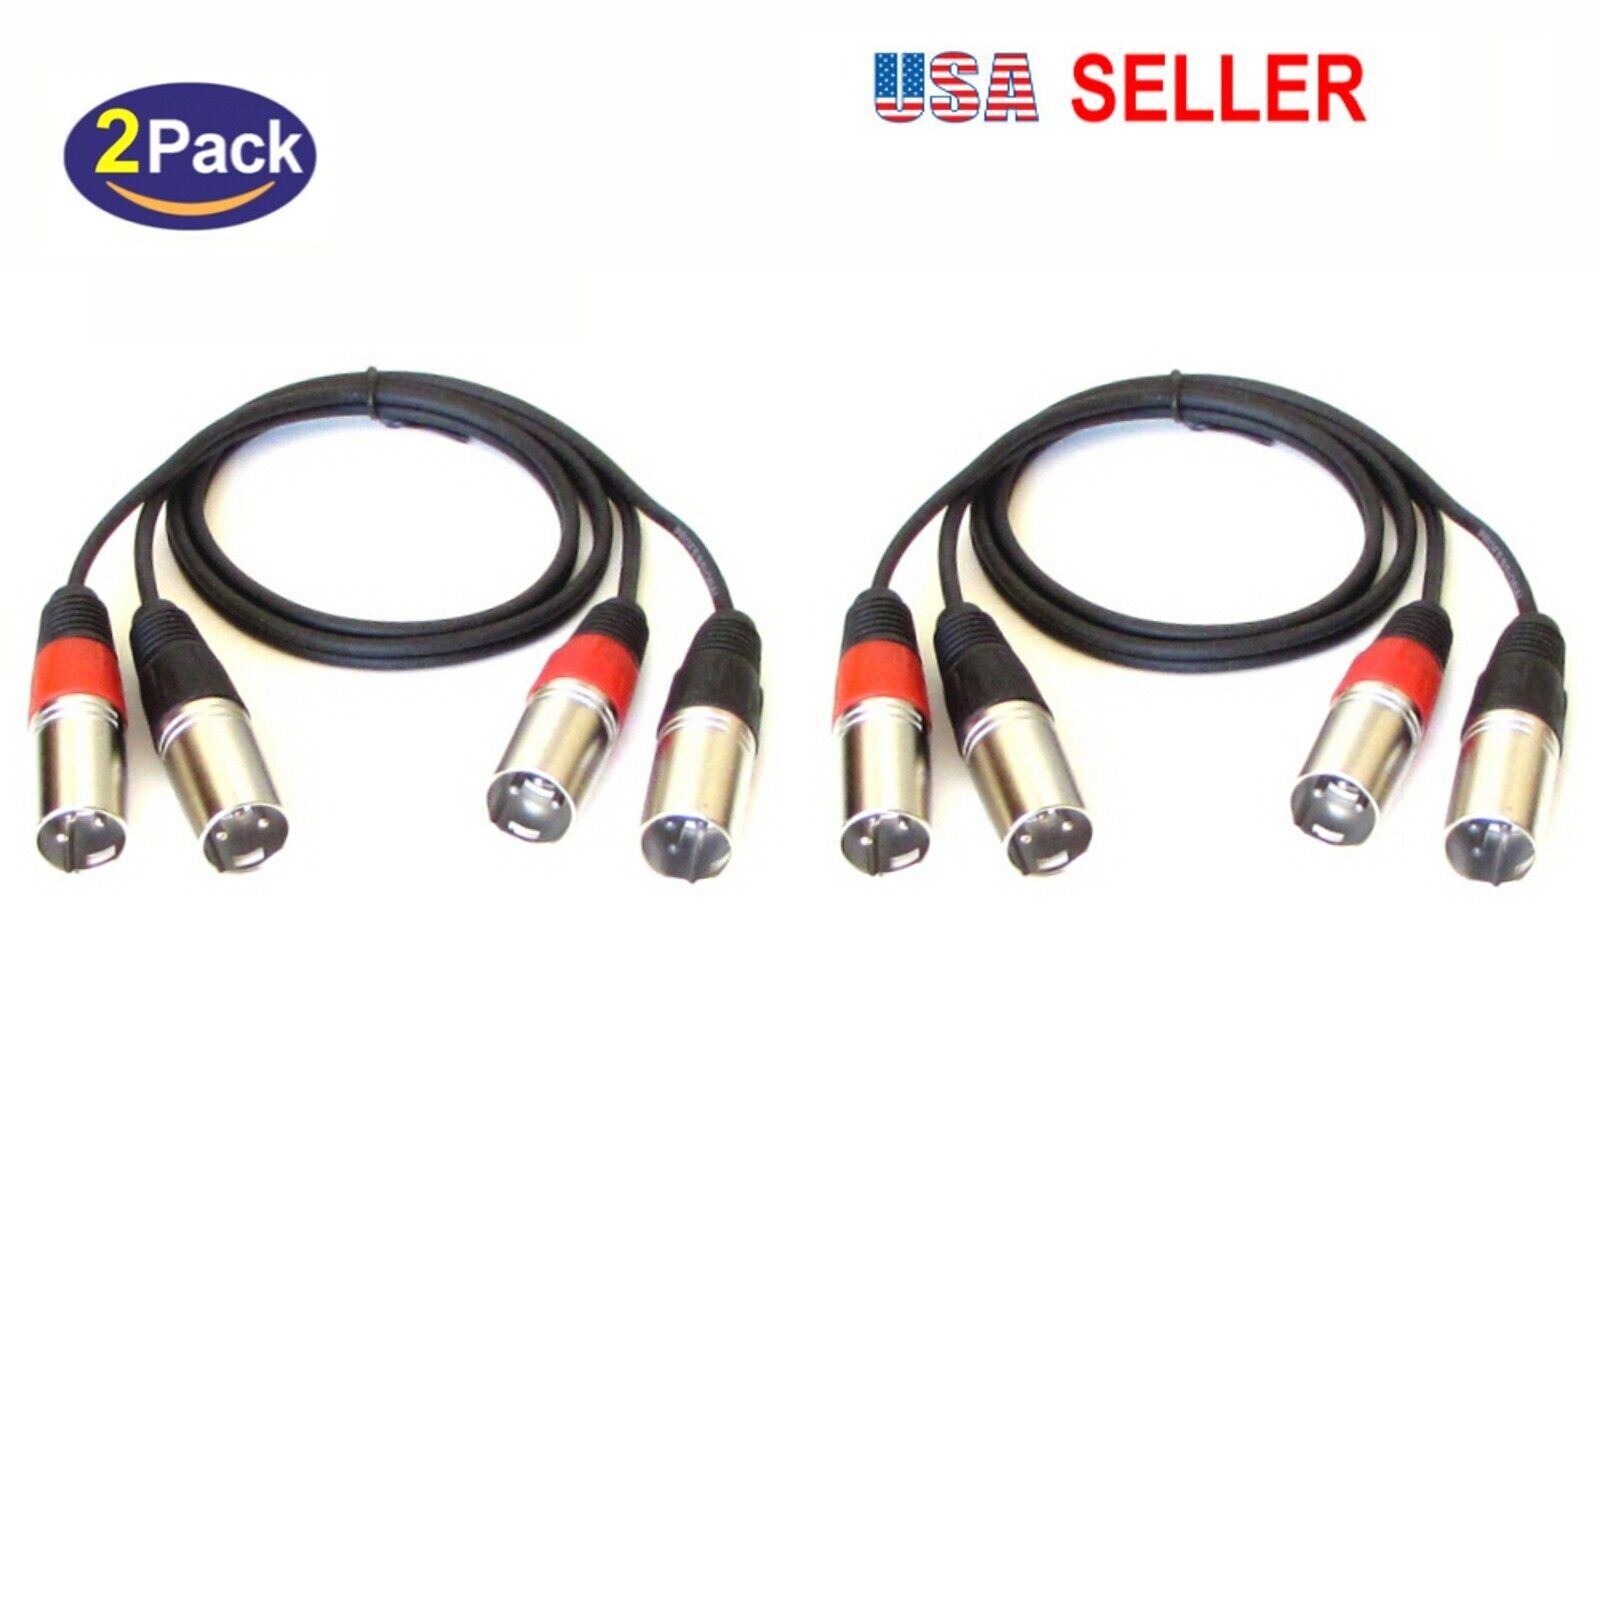 Dual XLR Male to Dual XLR Male, Heavy-duty Premium Audio Cable, 2-feet (2-pack)